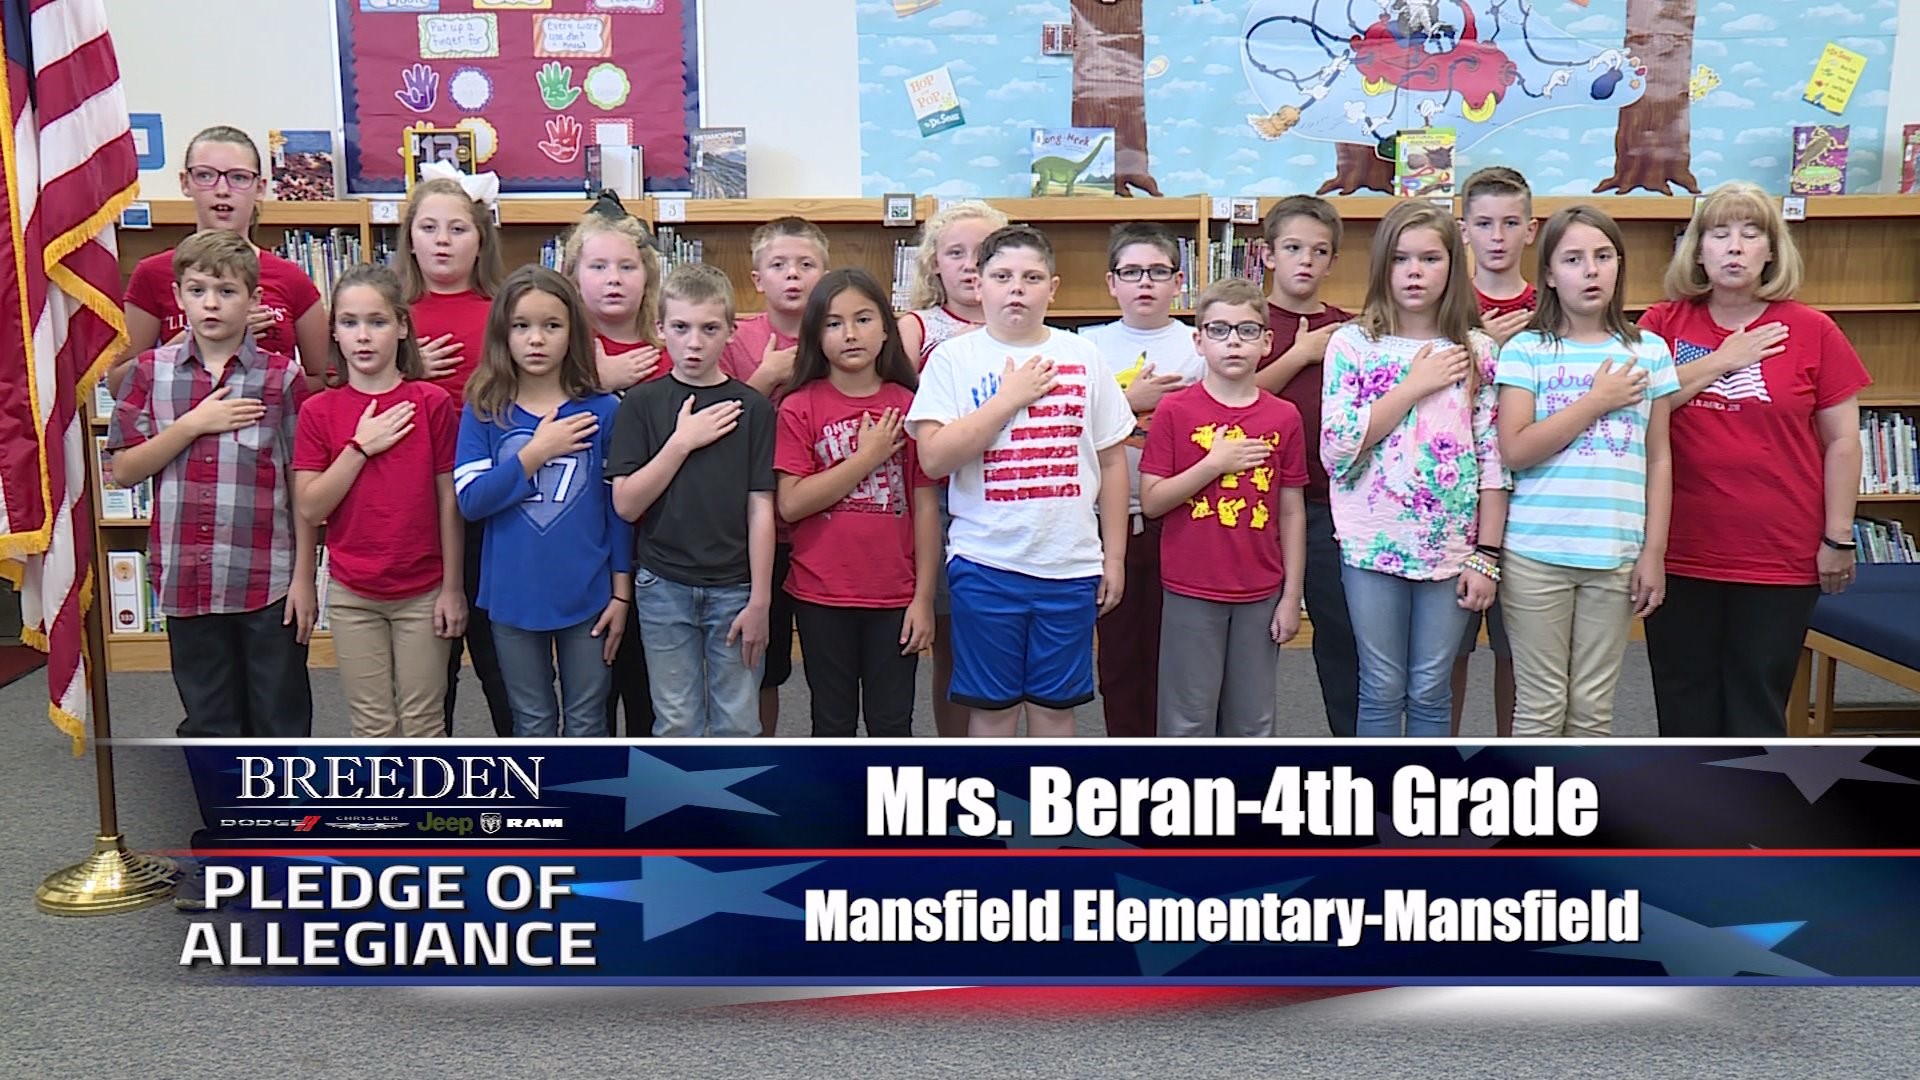 Mrs. Beran- 4th Grade Mansfield Elementary, Mansfield